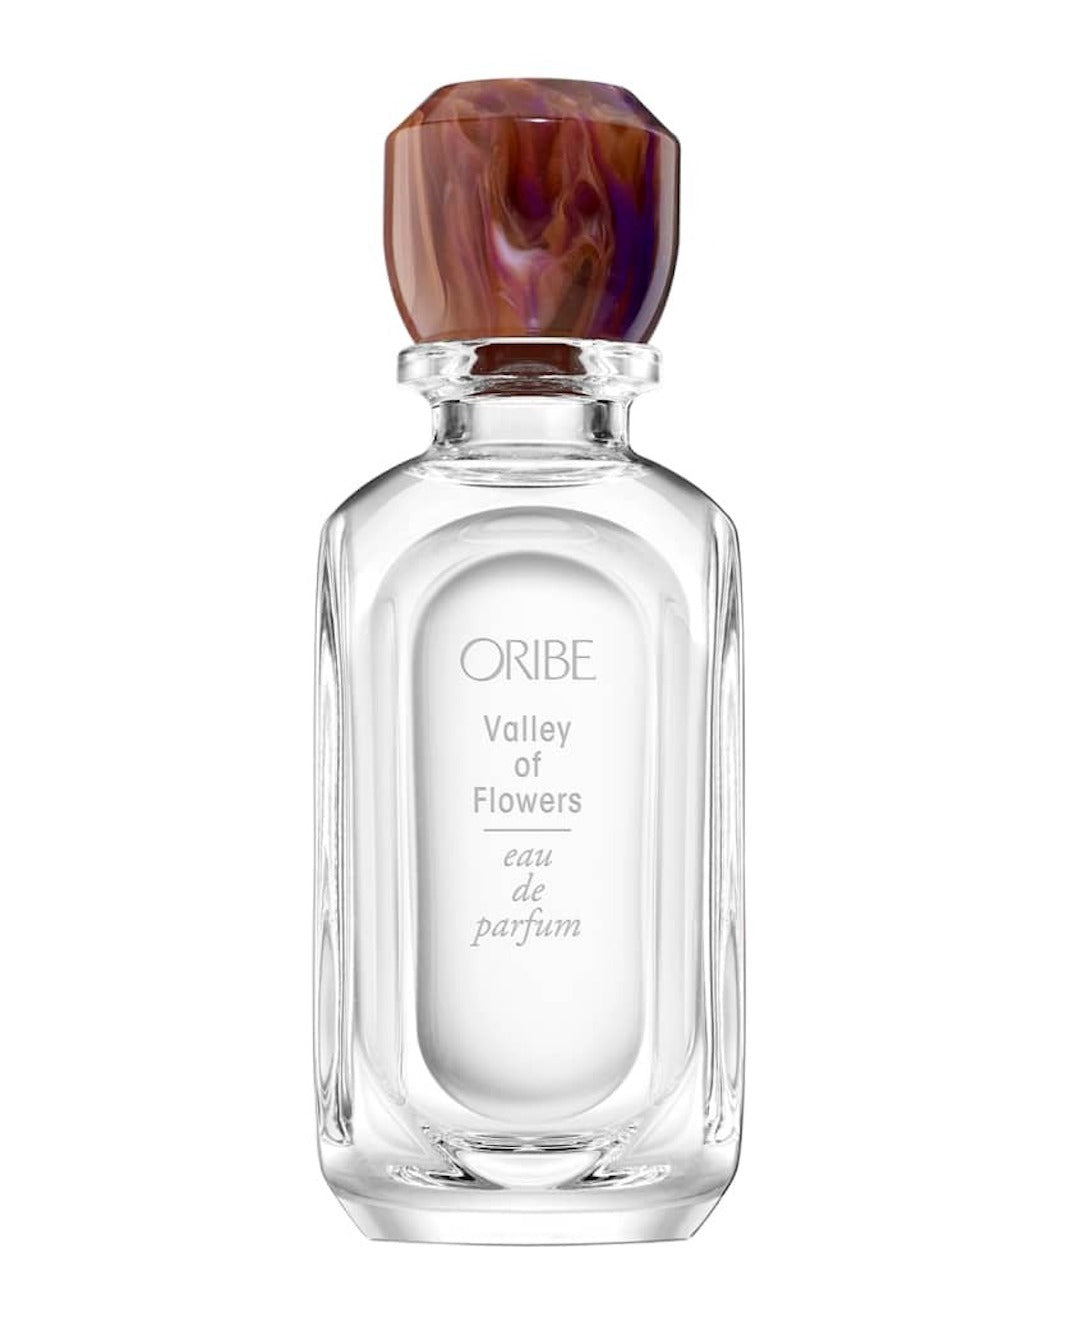 travel size coco chanel perfume